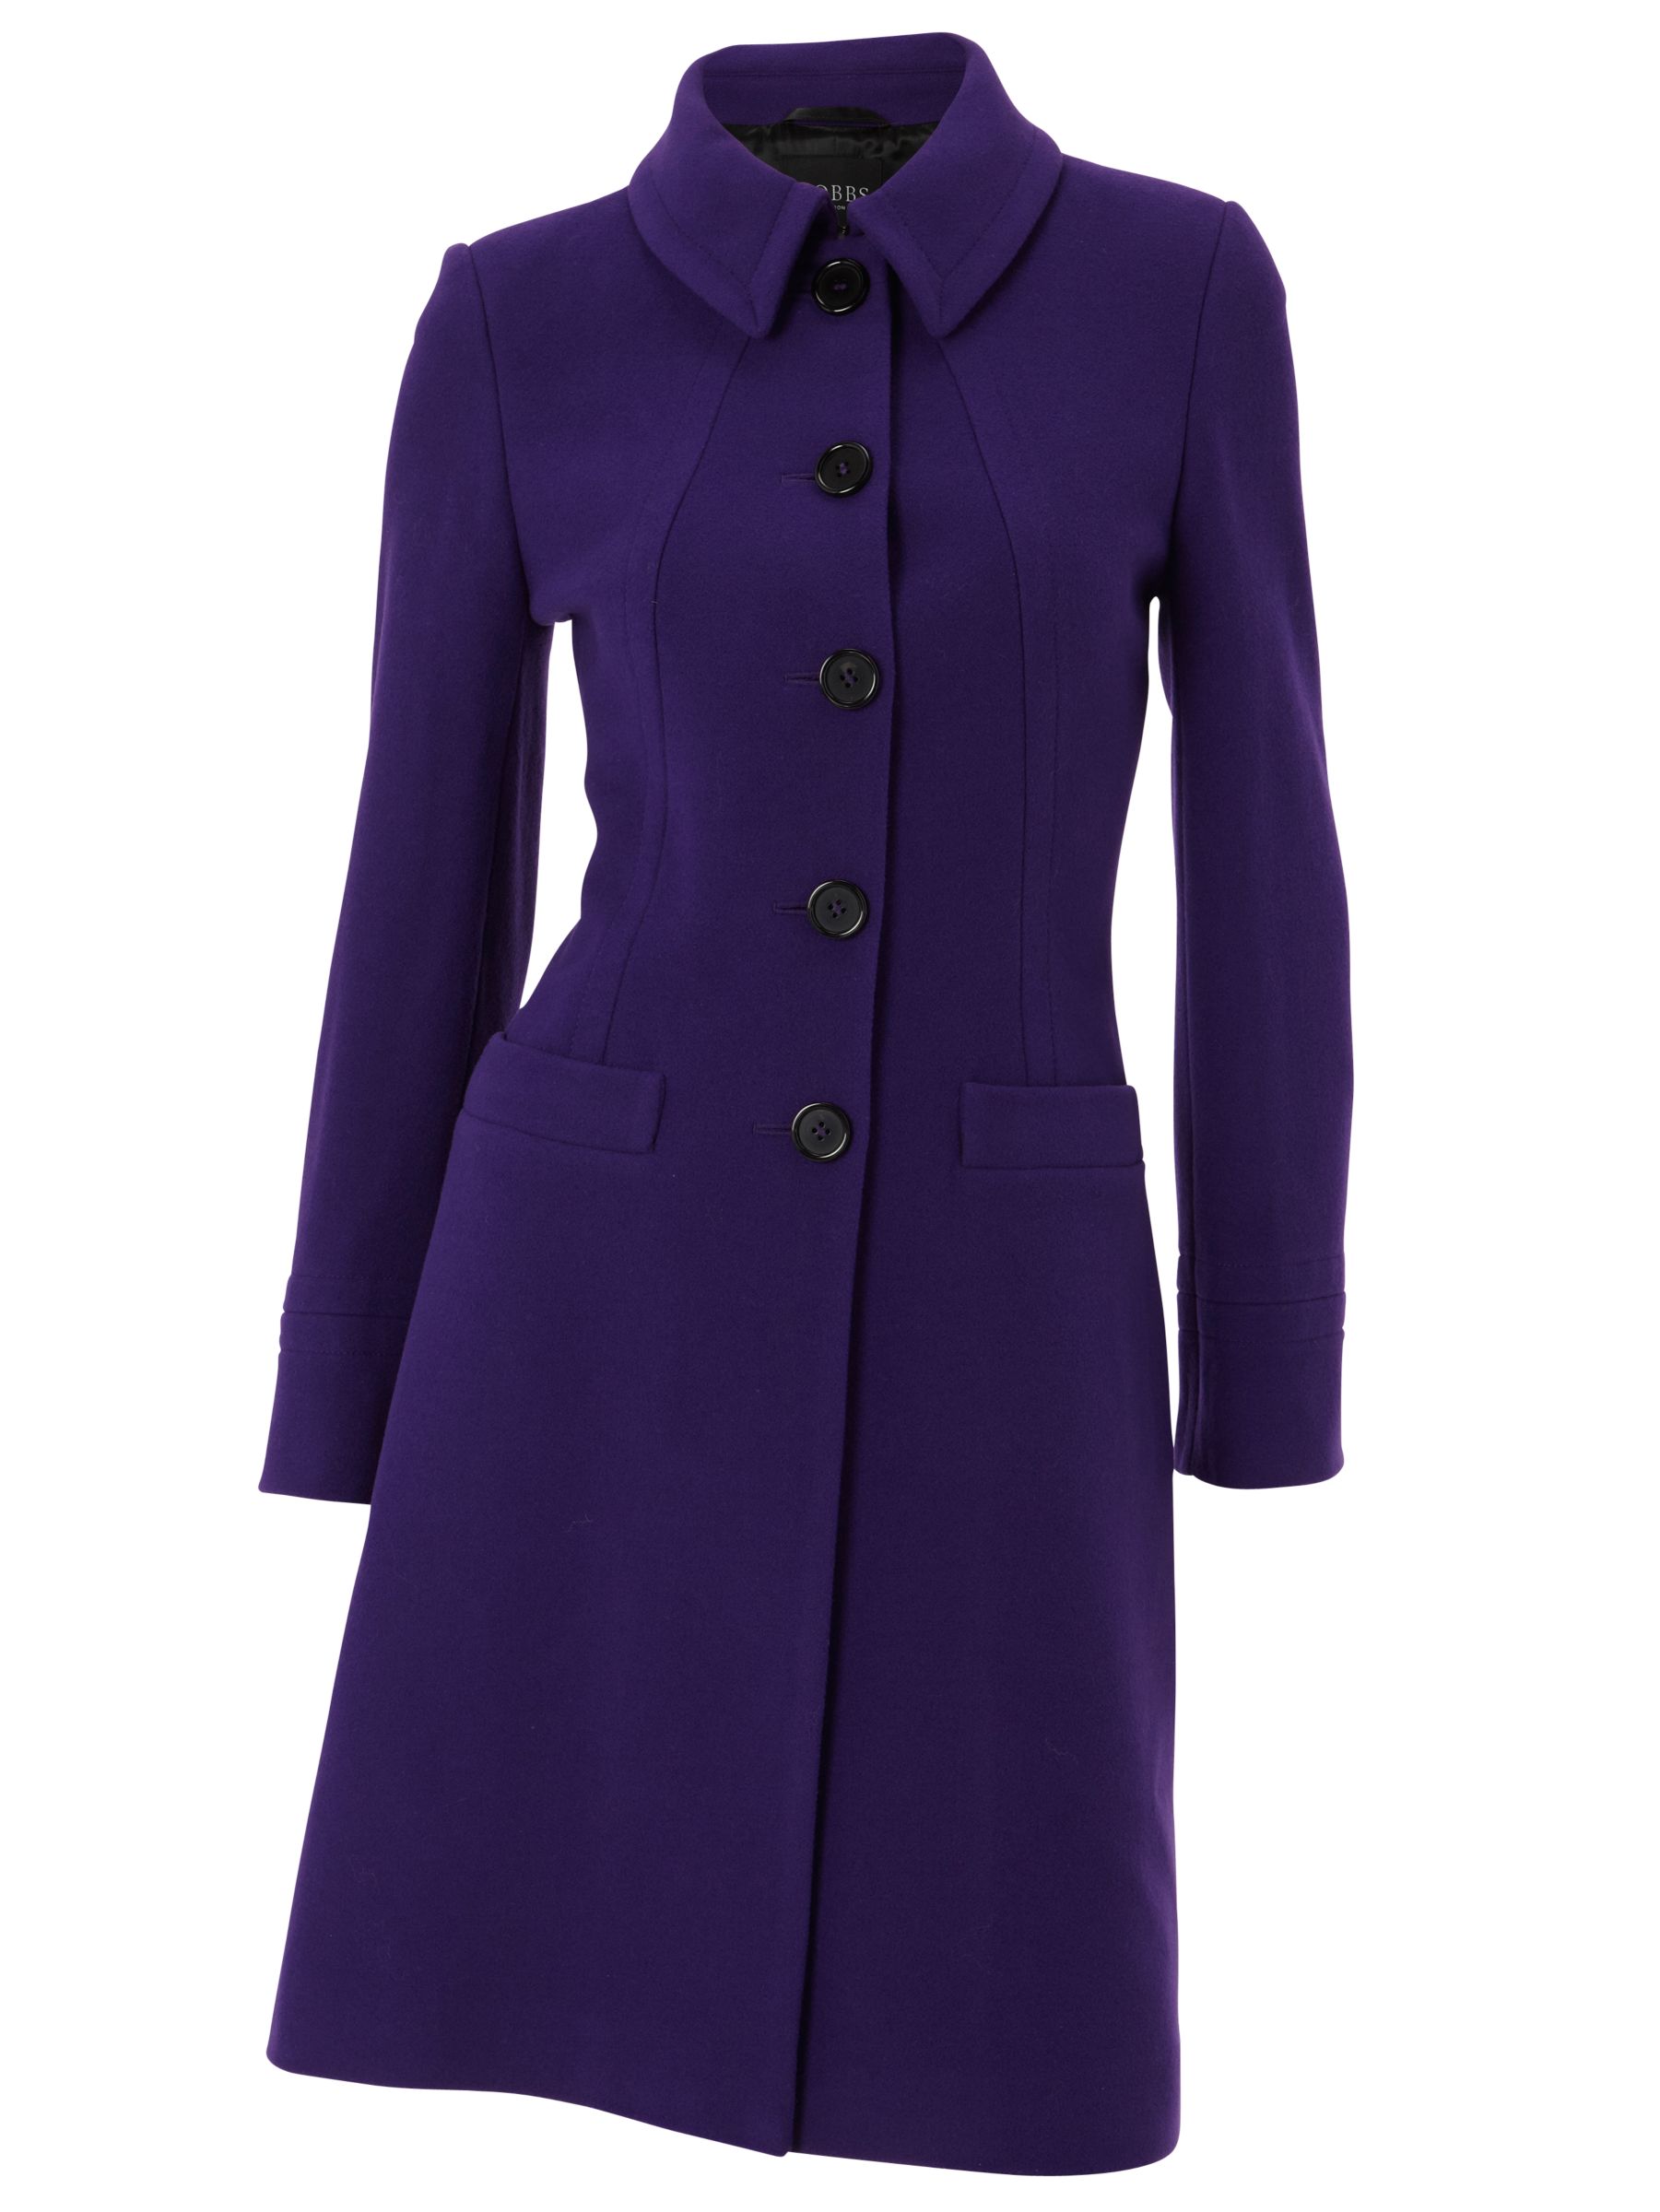 Hobbs Berkeley Long Coat, Purple at John Lewis